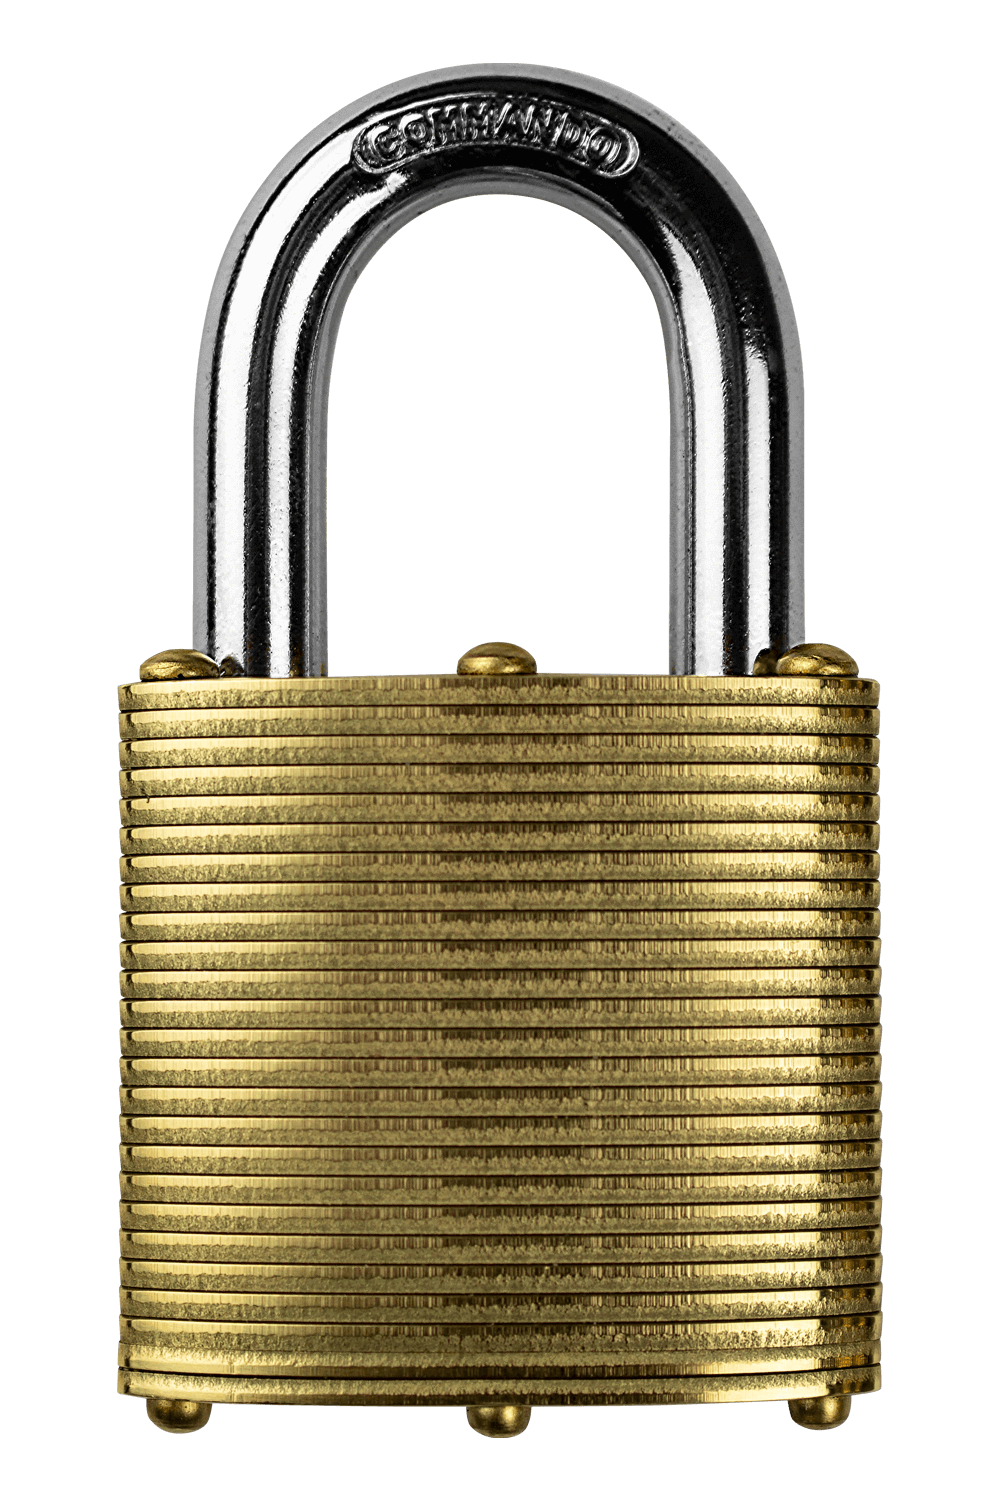 U.S. Navy brass padlock — The Arm